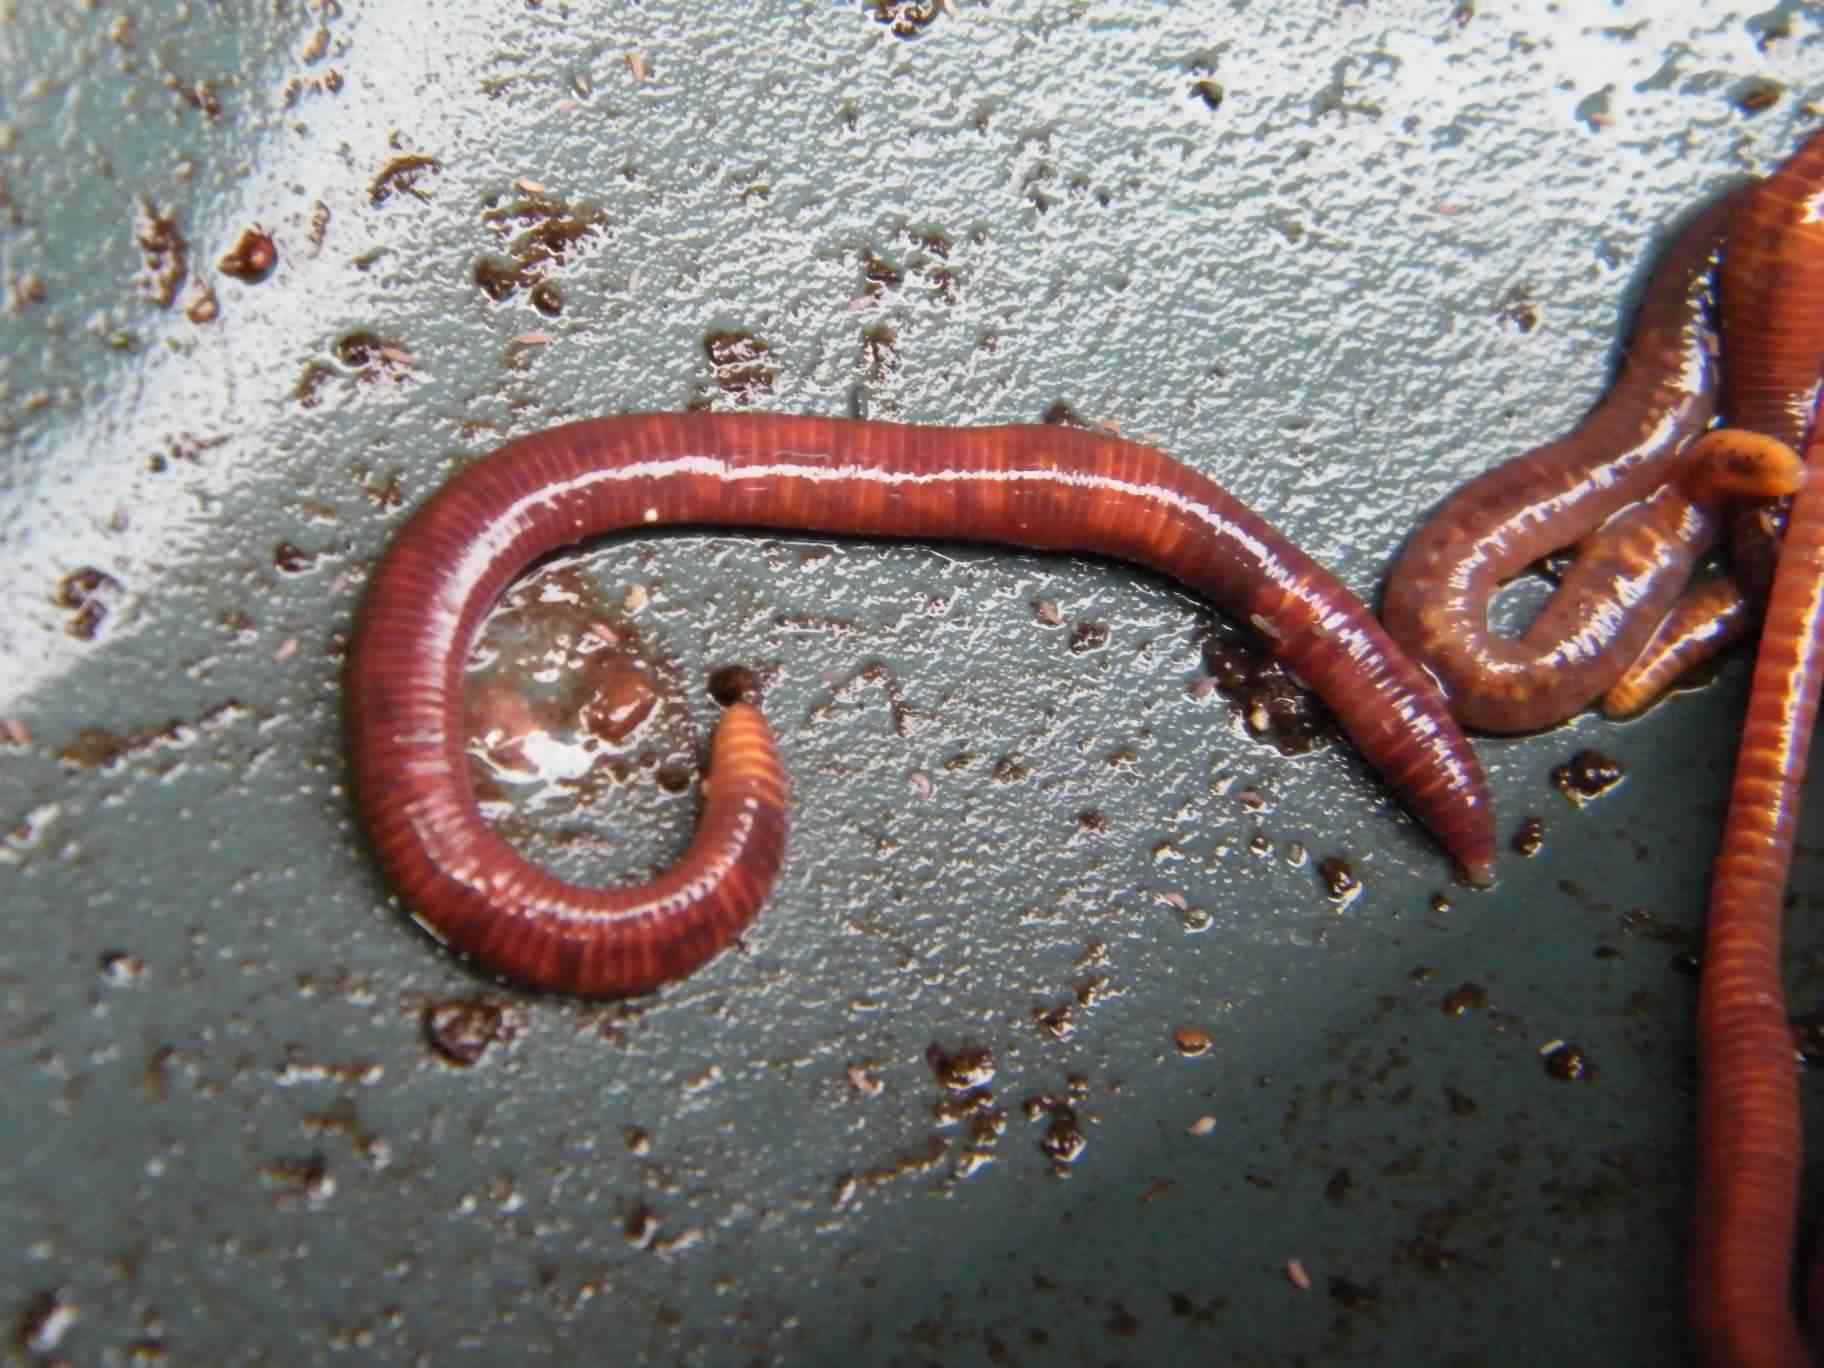 Earthworm - Lumbricus terrestris, species information page. Also